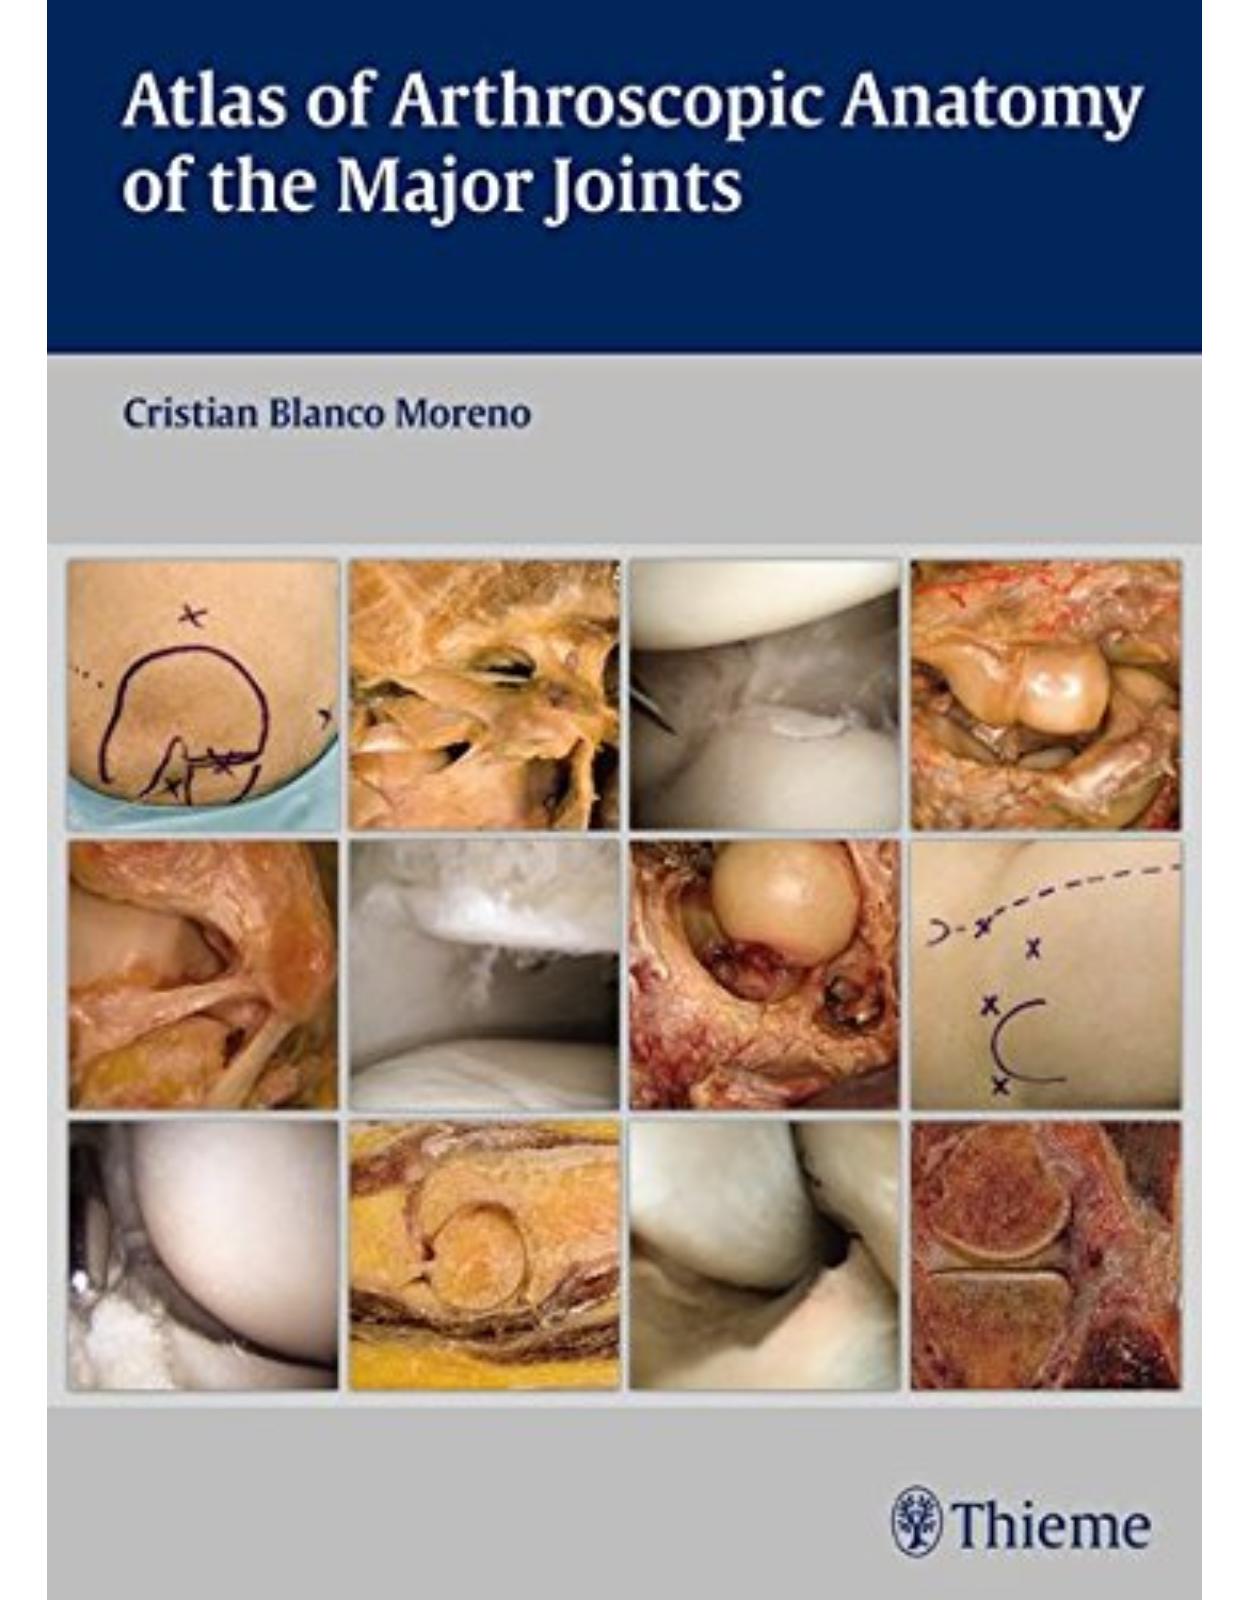  Atlas of Arthroscopic Anatomy of Major Joints